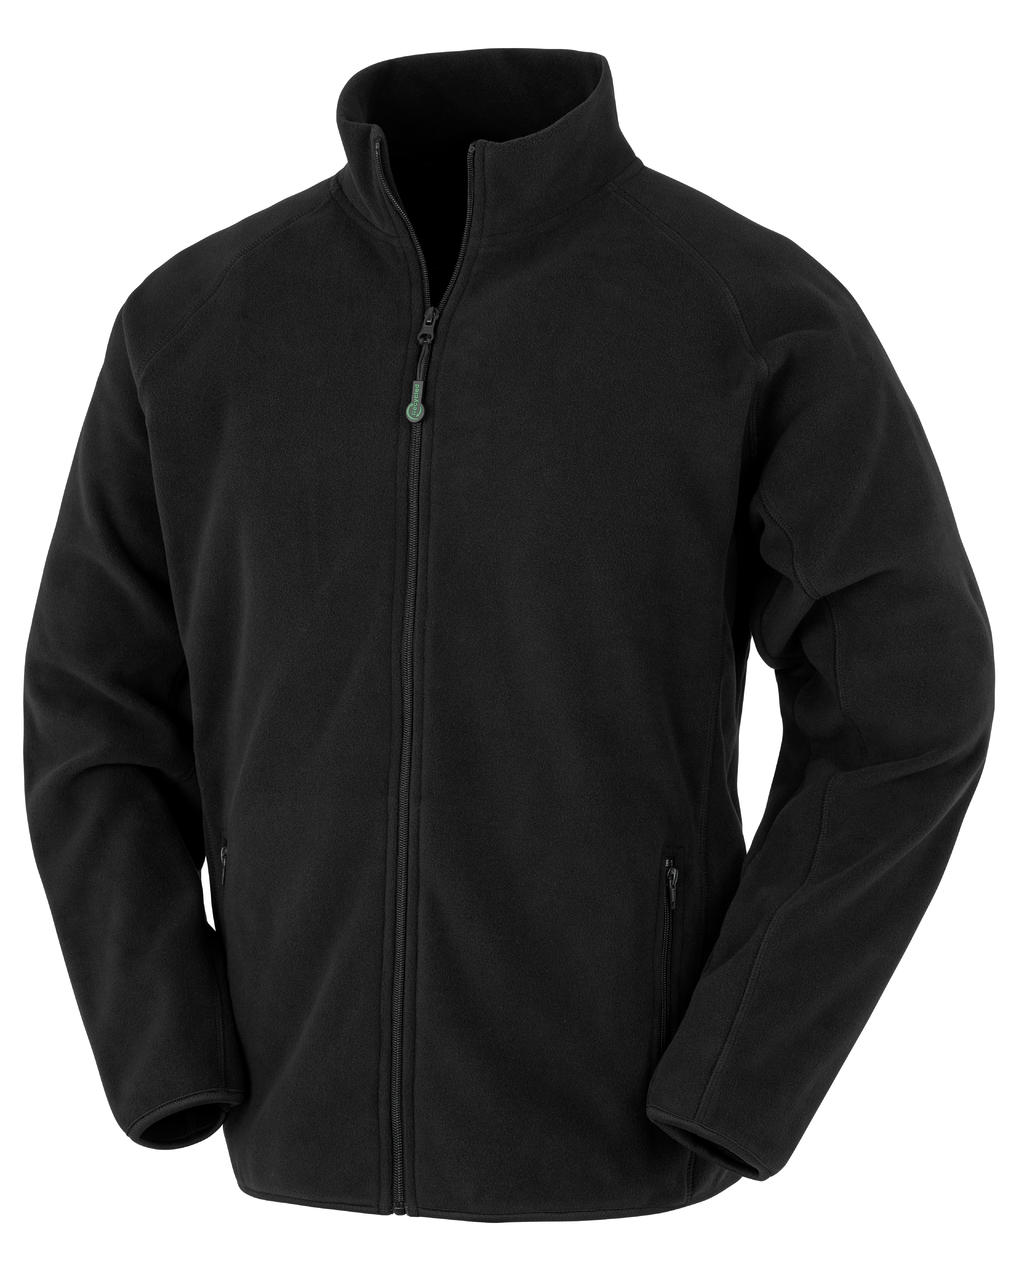  Recycled Fleece Polarthermic Jacket in Farbe Black